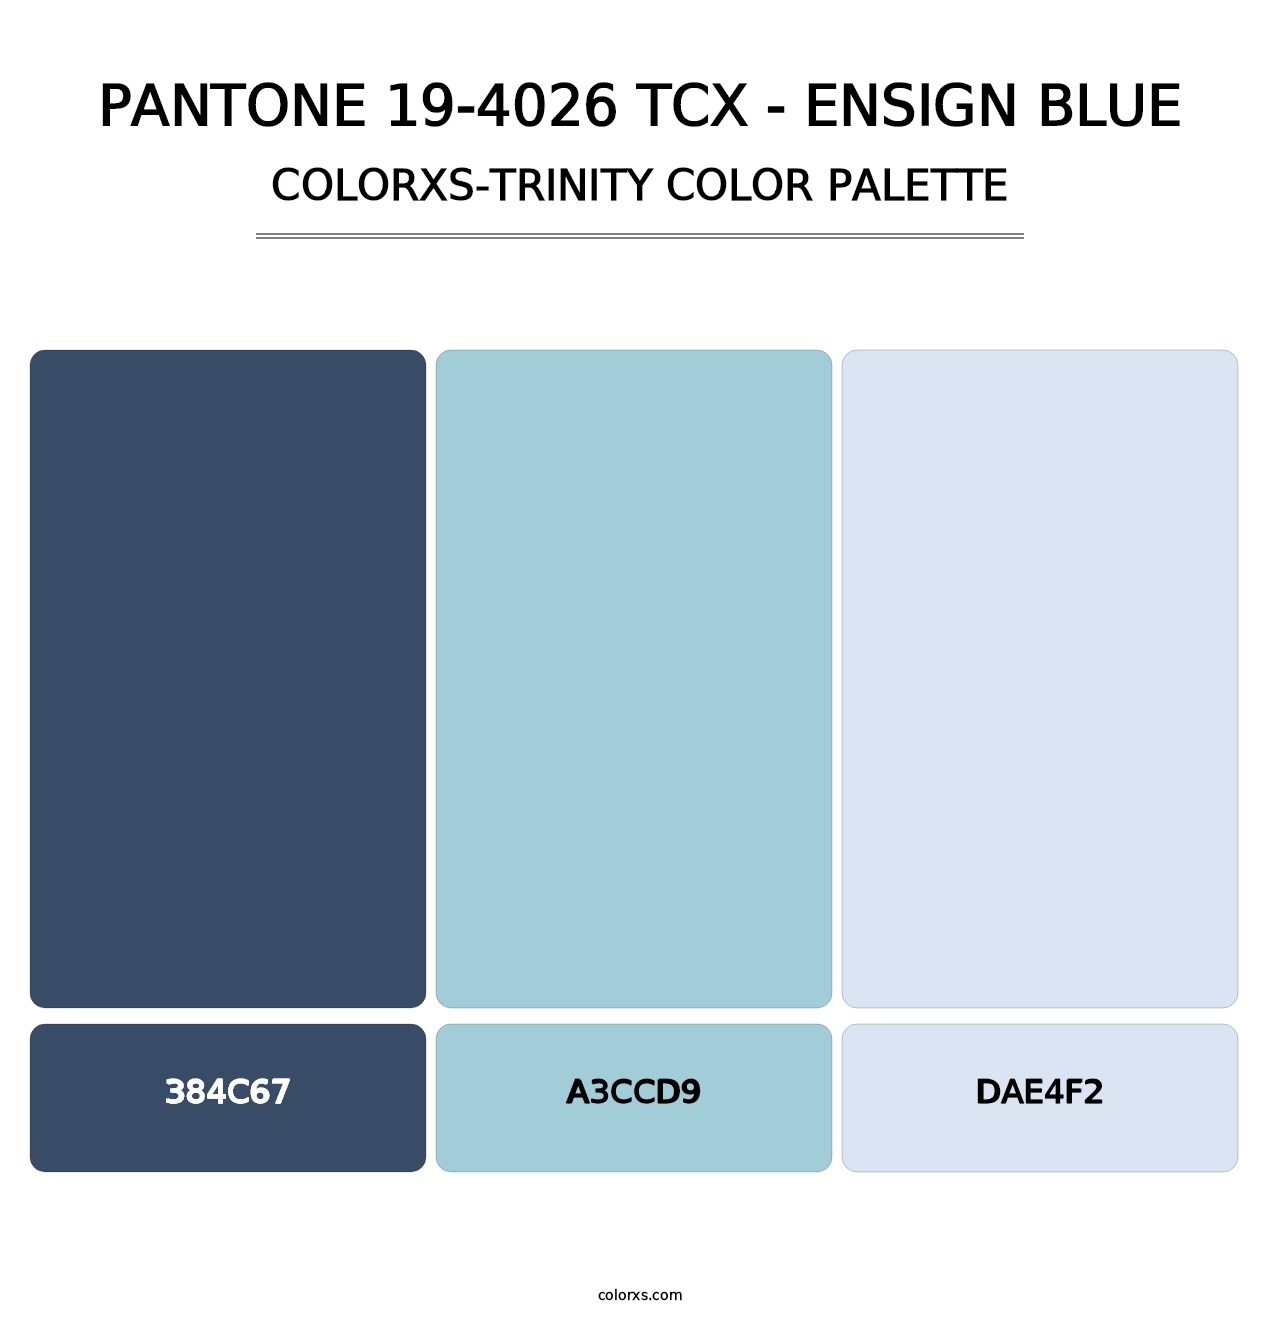 PANTONE 19-4026 TCX - Ensign Blue - Colorxs Trinity Palette